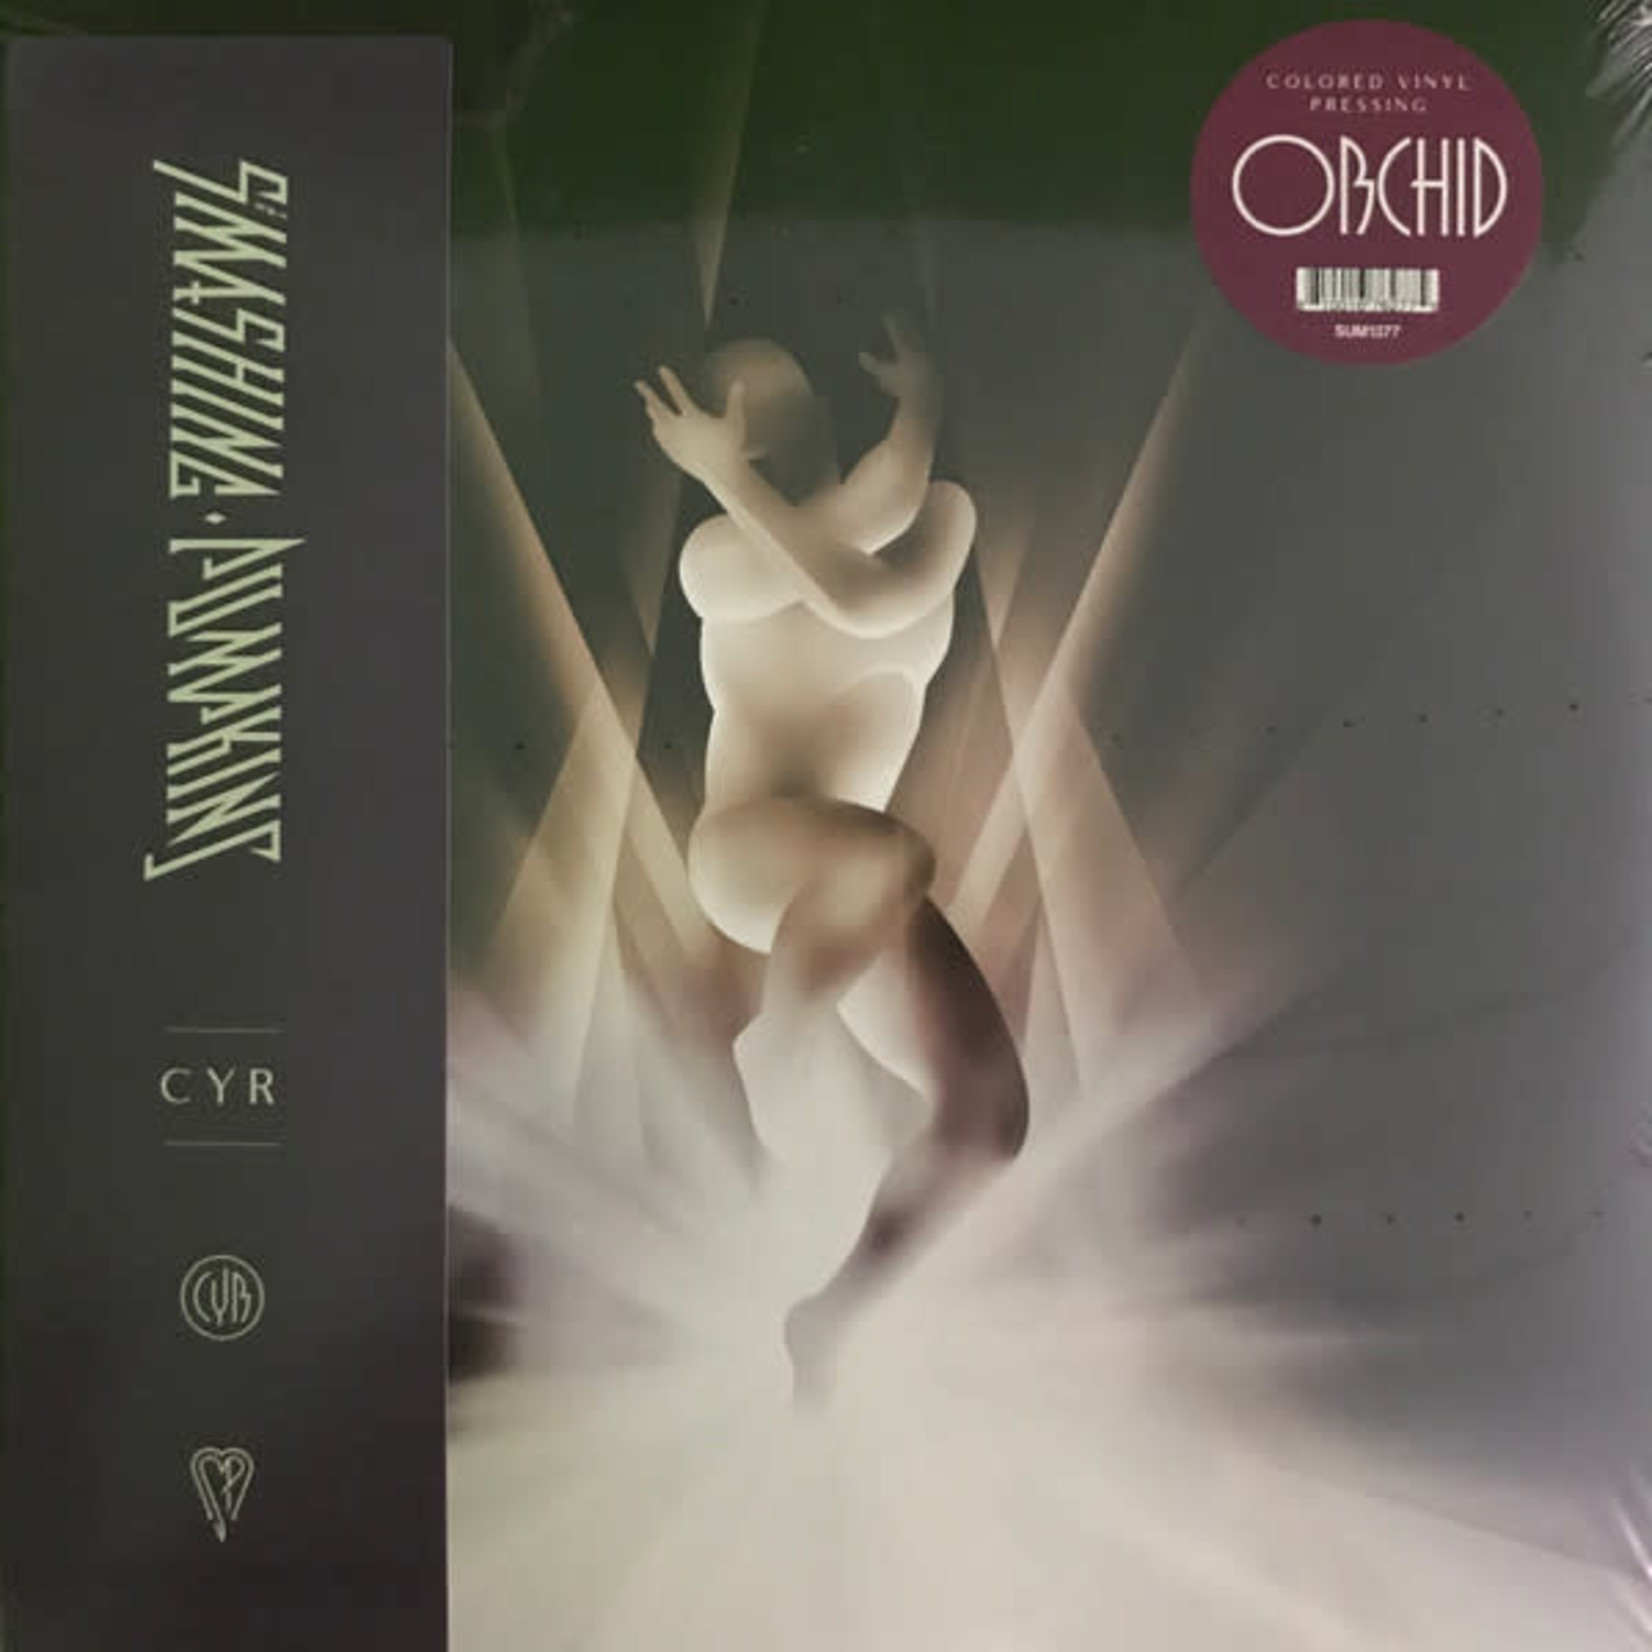 Sumerian Smashing Pumpkins - Cyr (2LP) [Orchid]